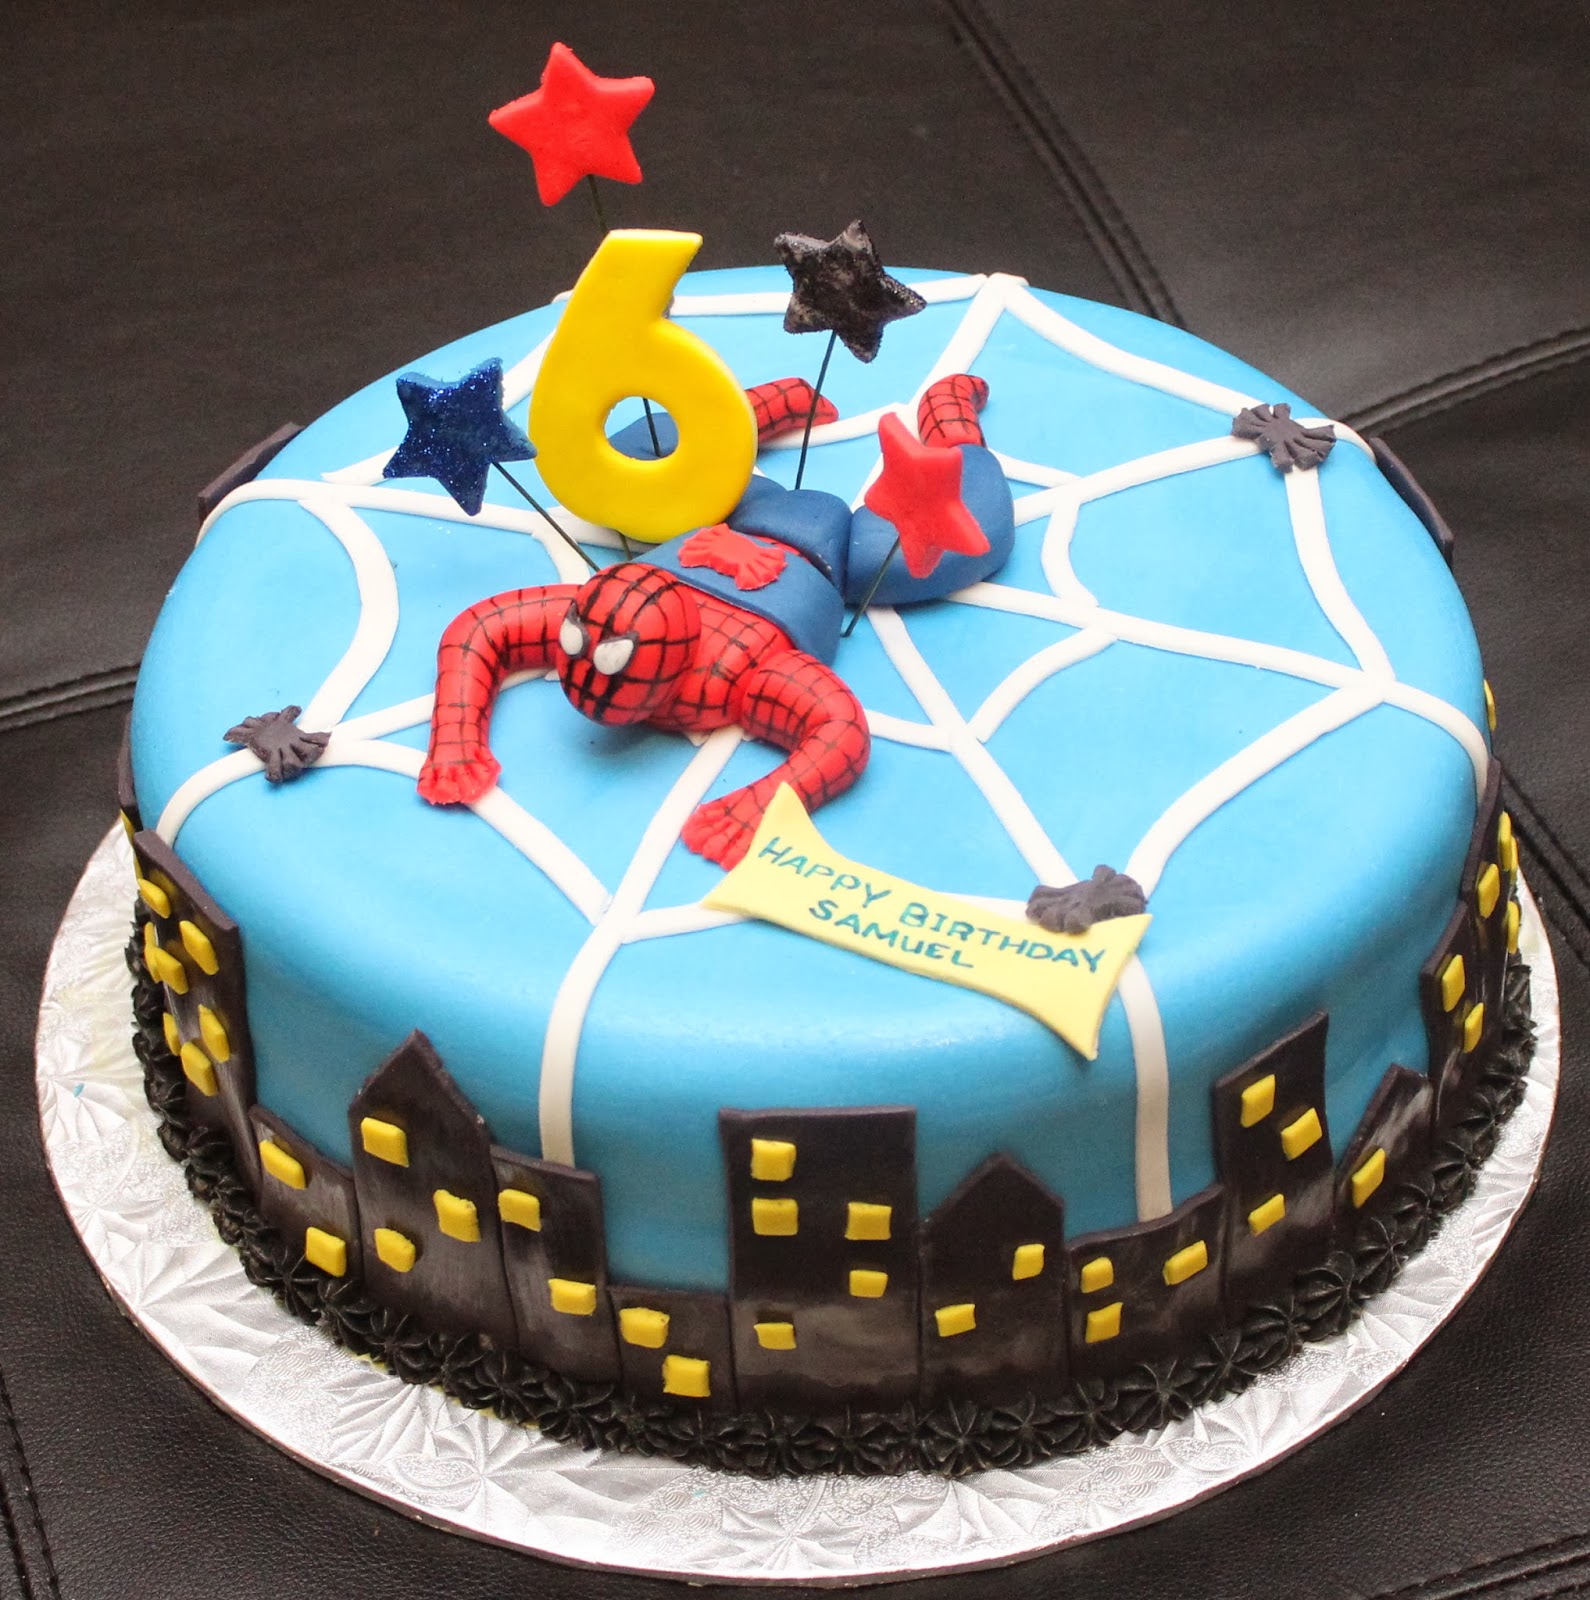 Love Dem Goodies: Spiderman Cake